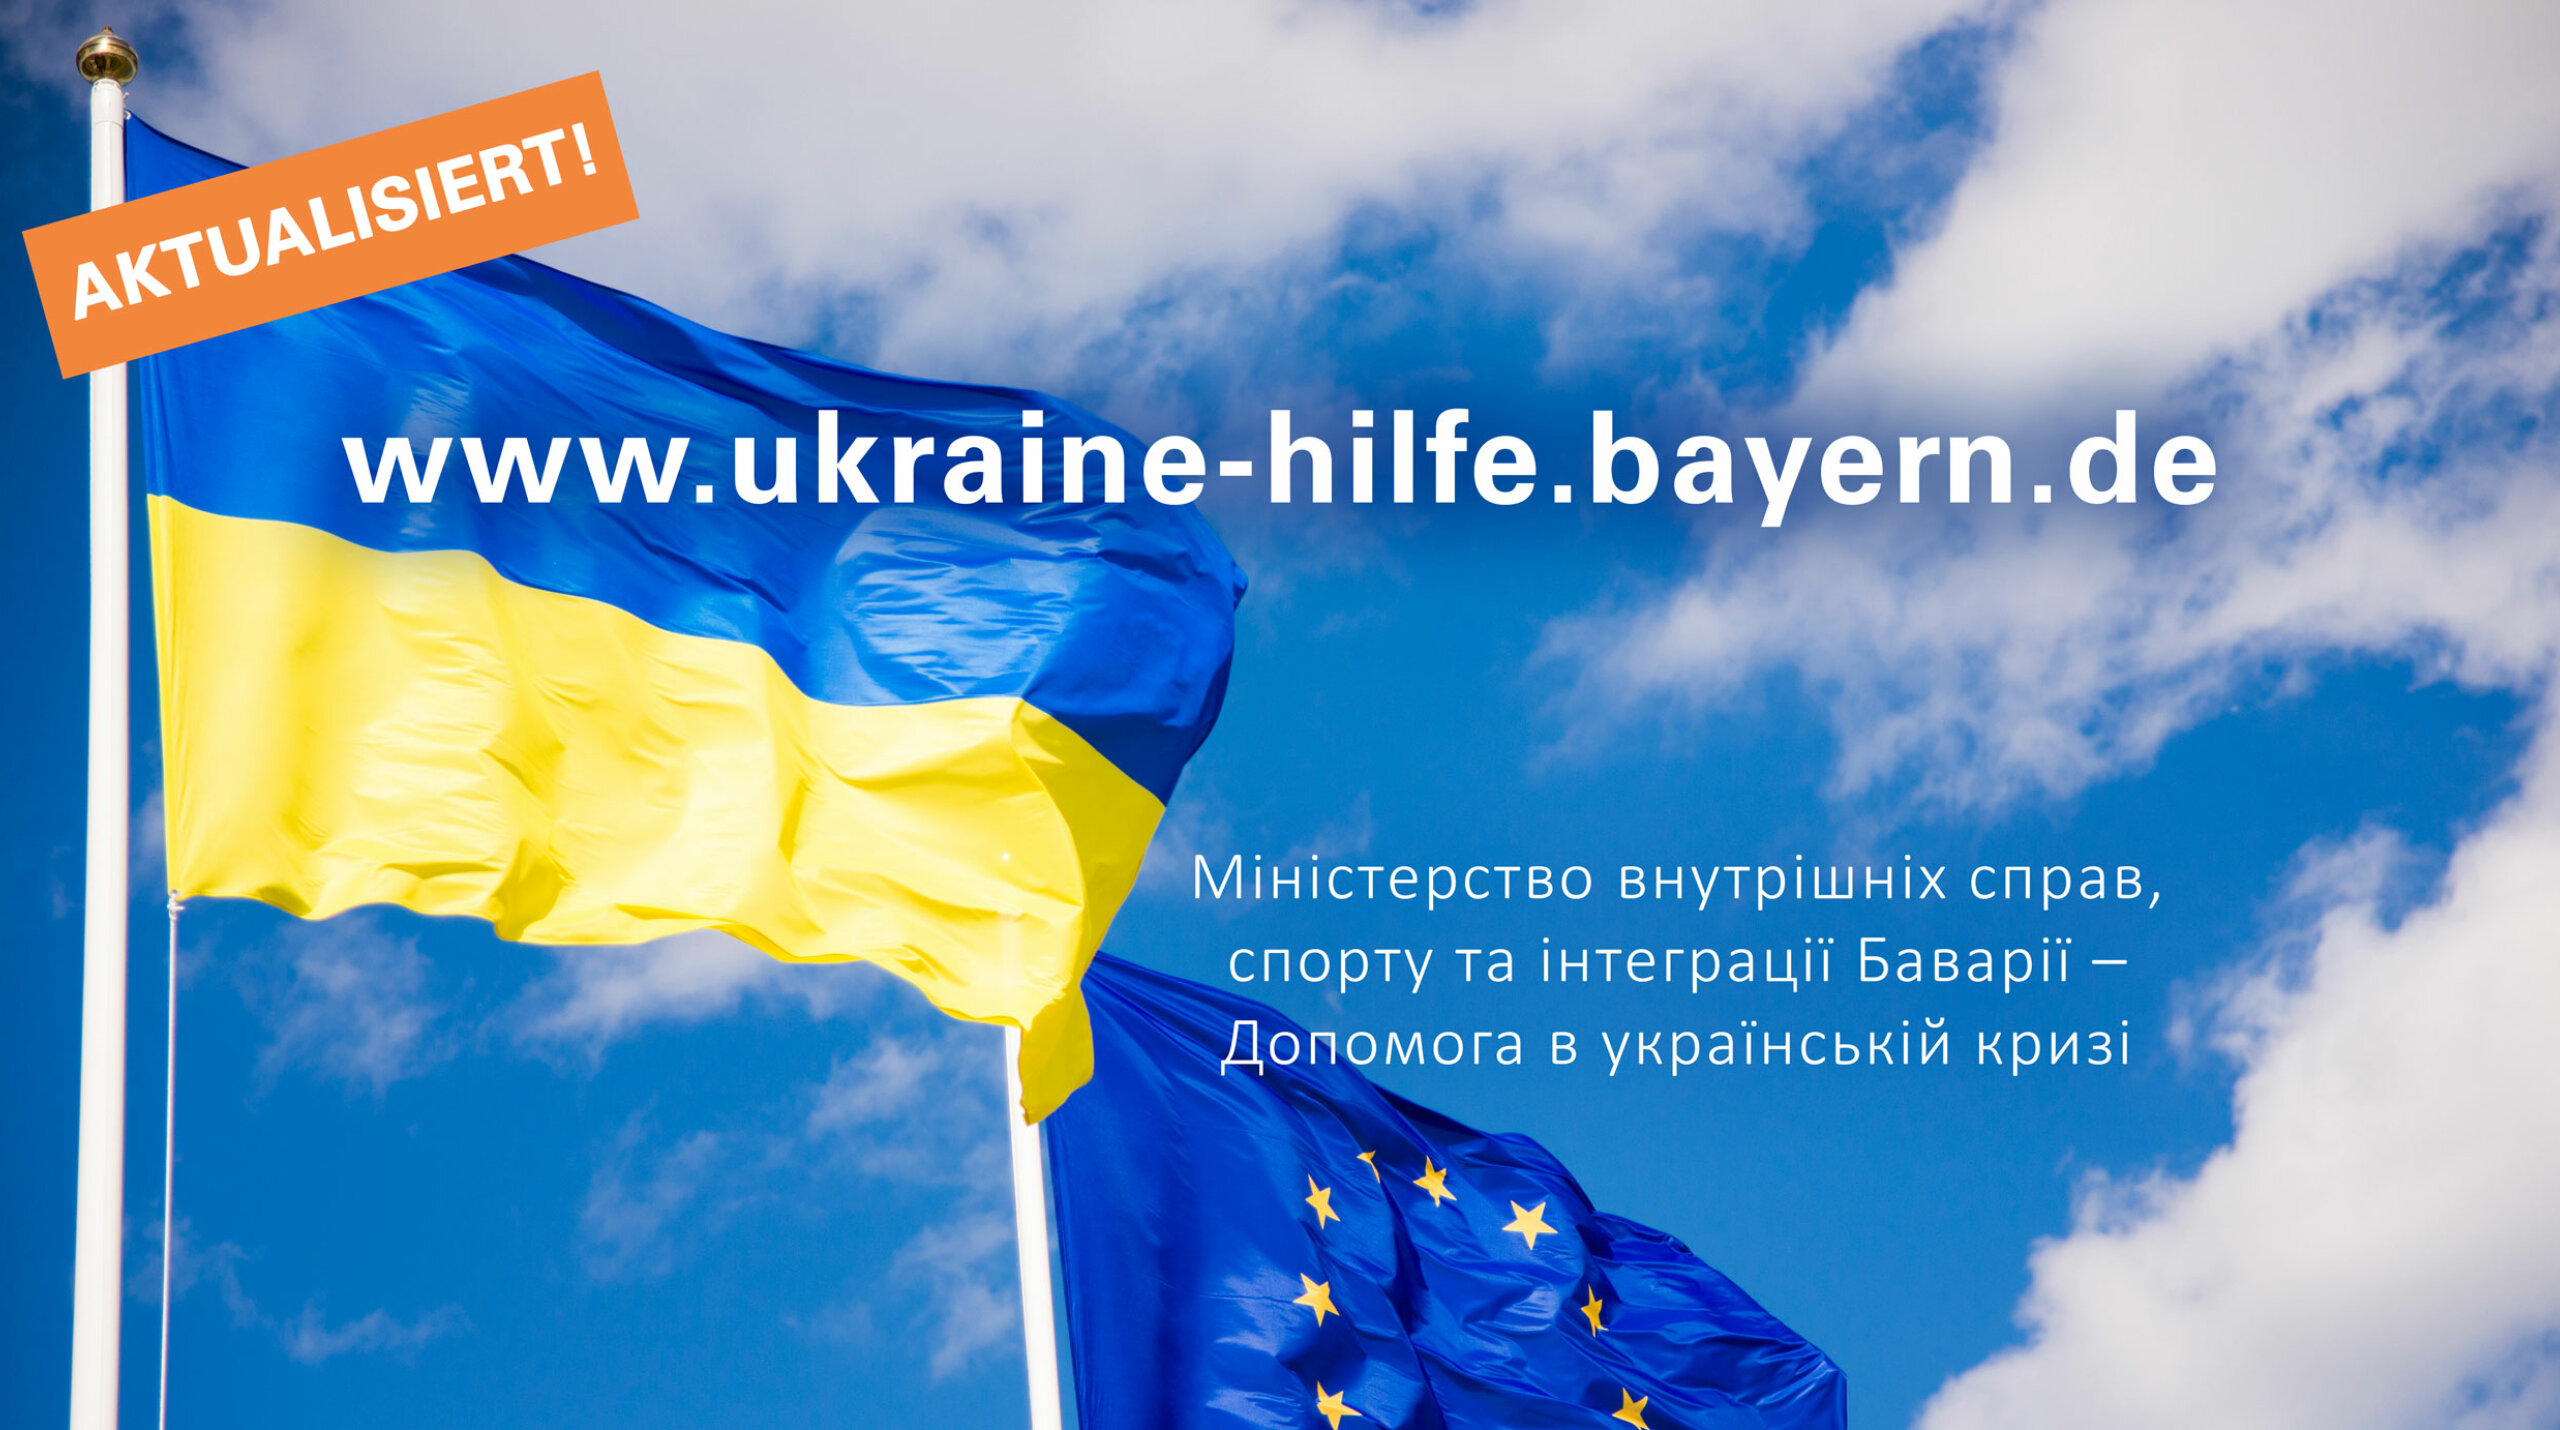 Grafik zur Internetseite: Aktualisiert! www.ukraine-hilfe.bayern.de / Допомога в українській кризі